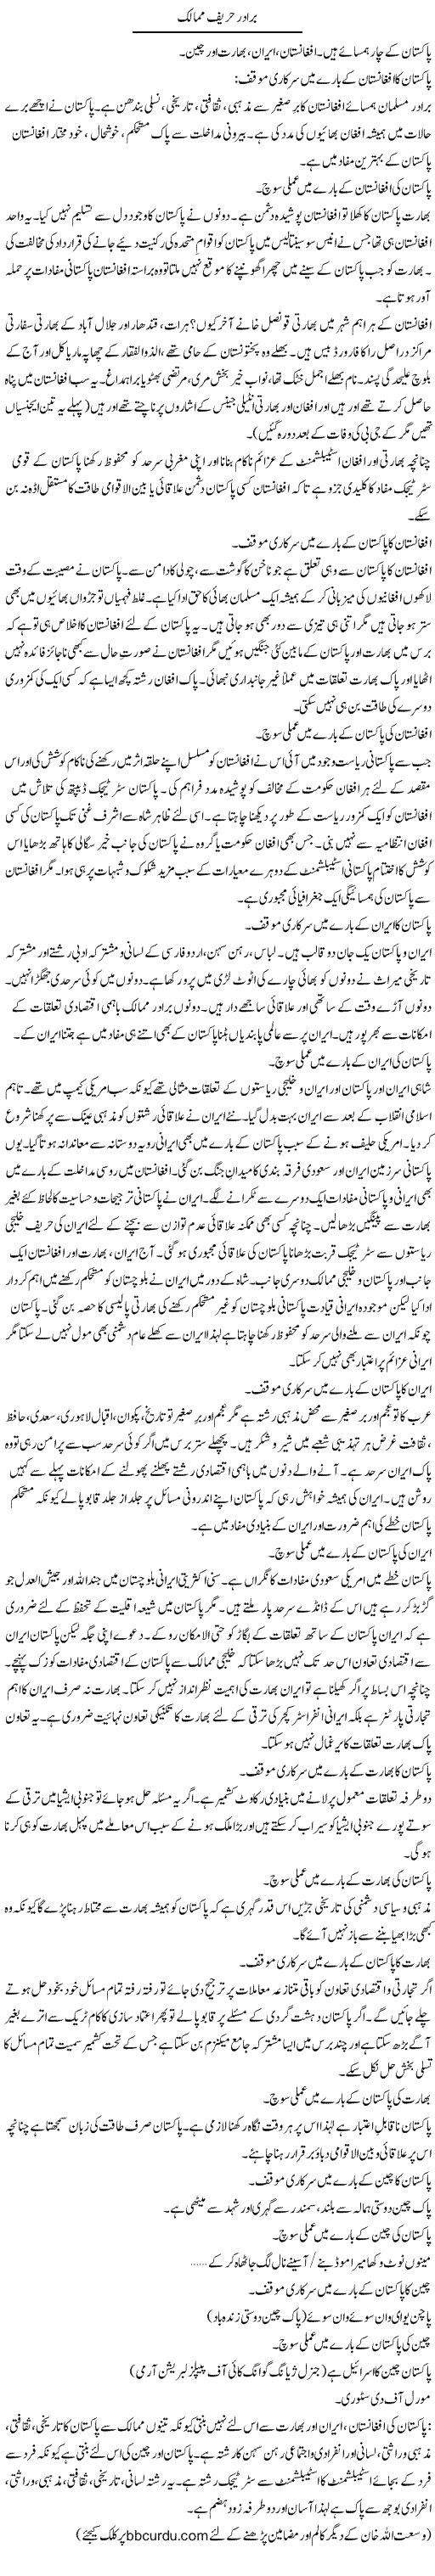 Brother Hareef Mumalik | Wusat Ullah Khan | Daily Urdu Columns